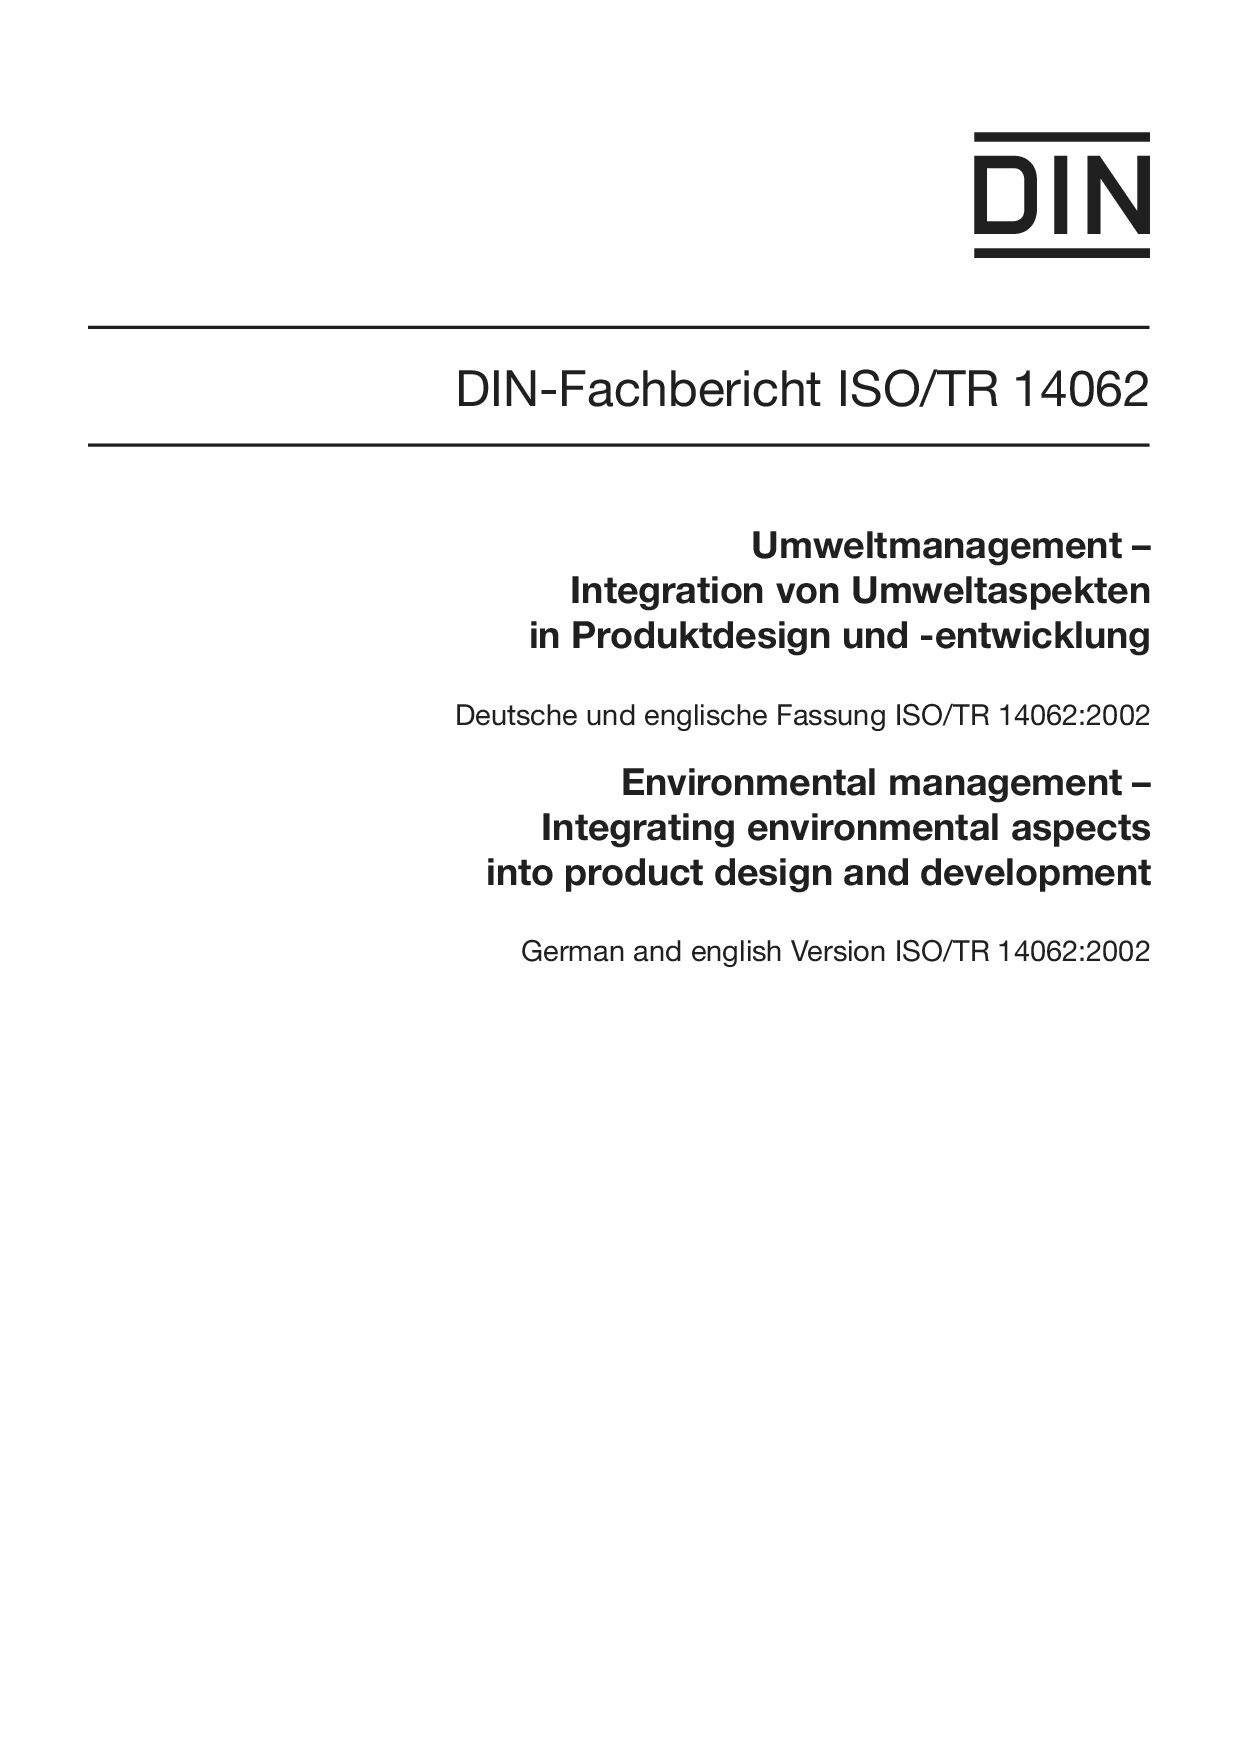 DIN-Fachbericht ISO/TR 14062:2003